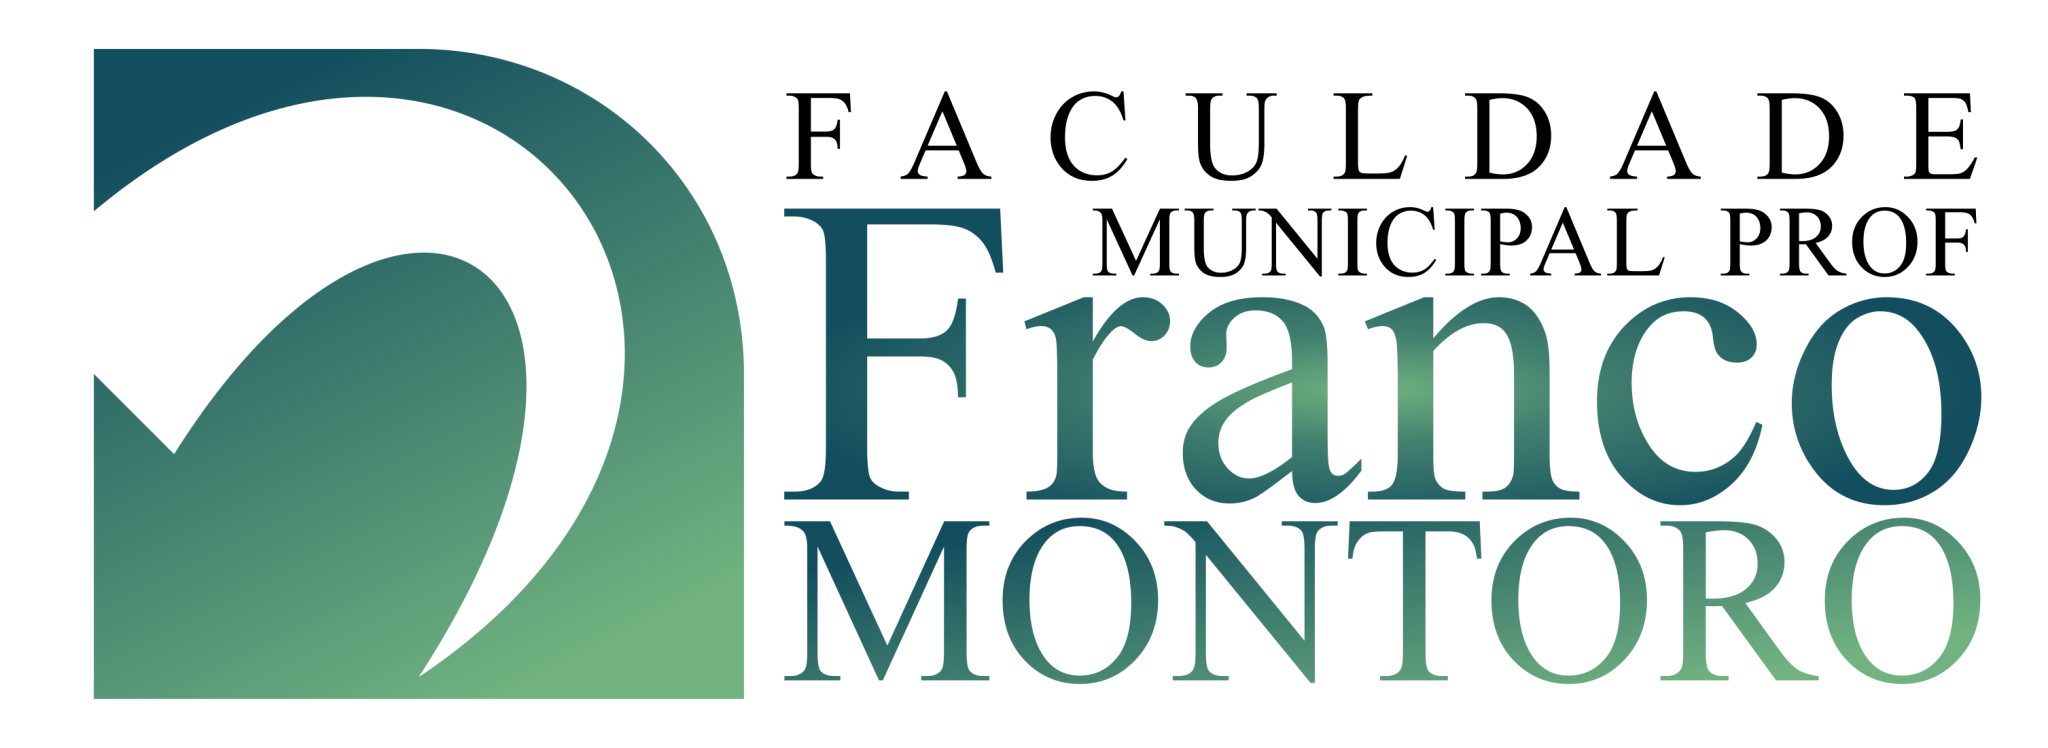 Professor Franco Montoro Municipal Faculty logo